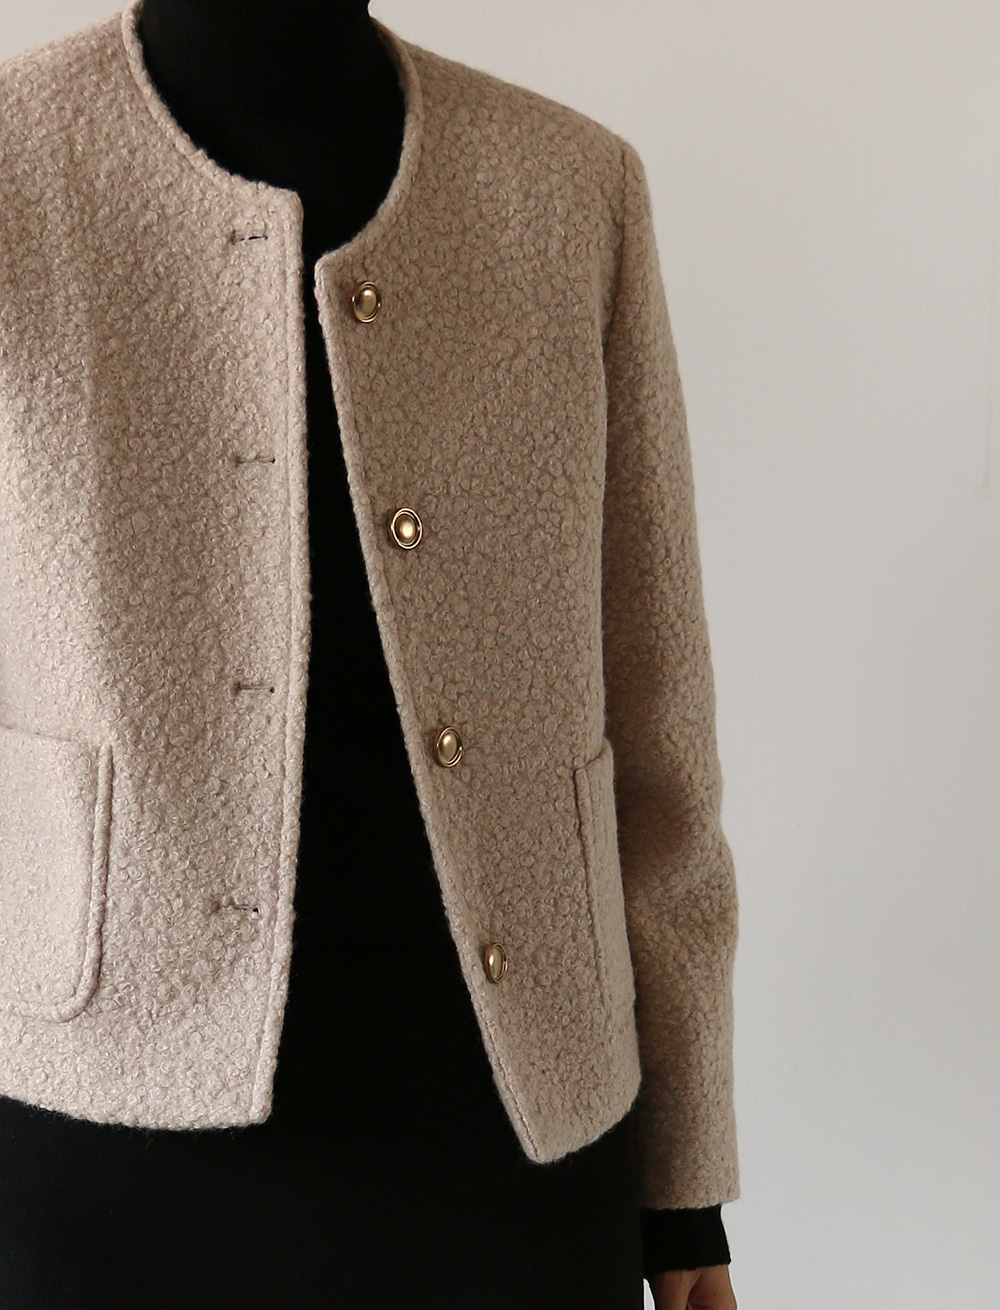 winter tweed jacket (2c)  2온스 퀼팅 안감 트위드 자켓